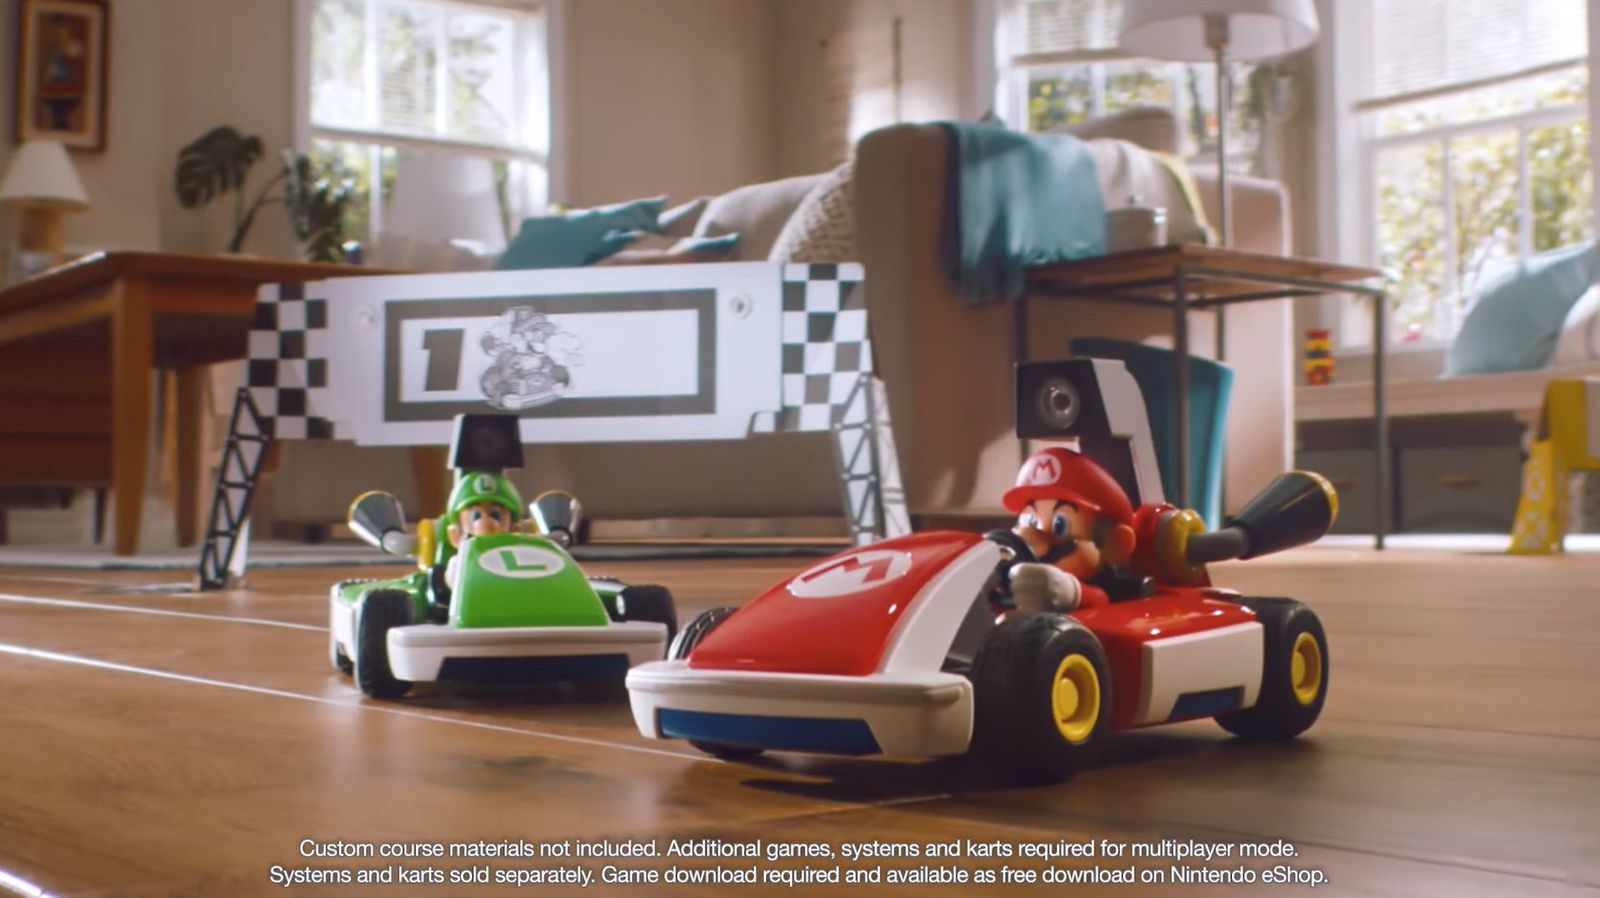 Mario Kart Live Home Circuit Remote Control Cars